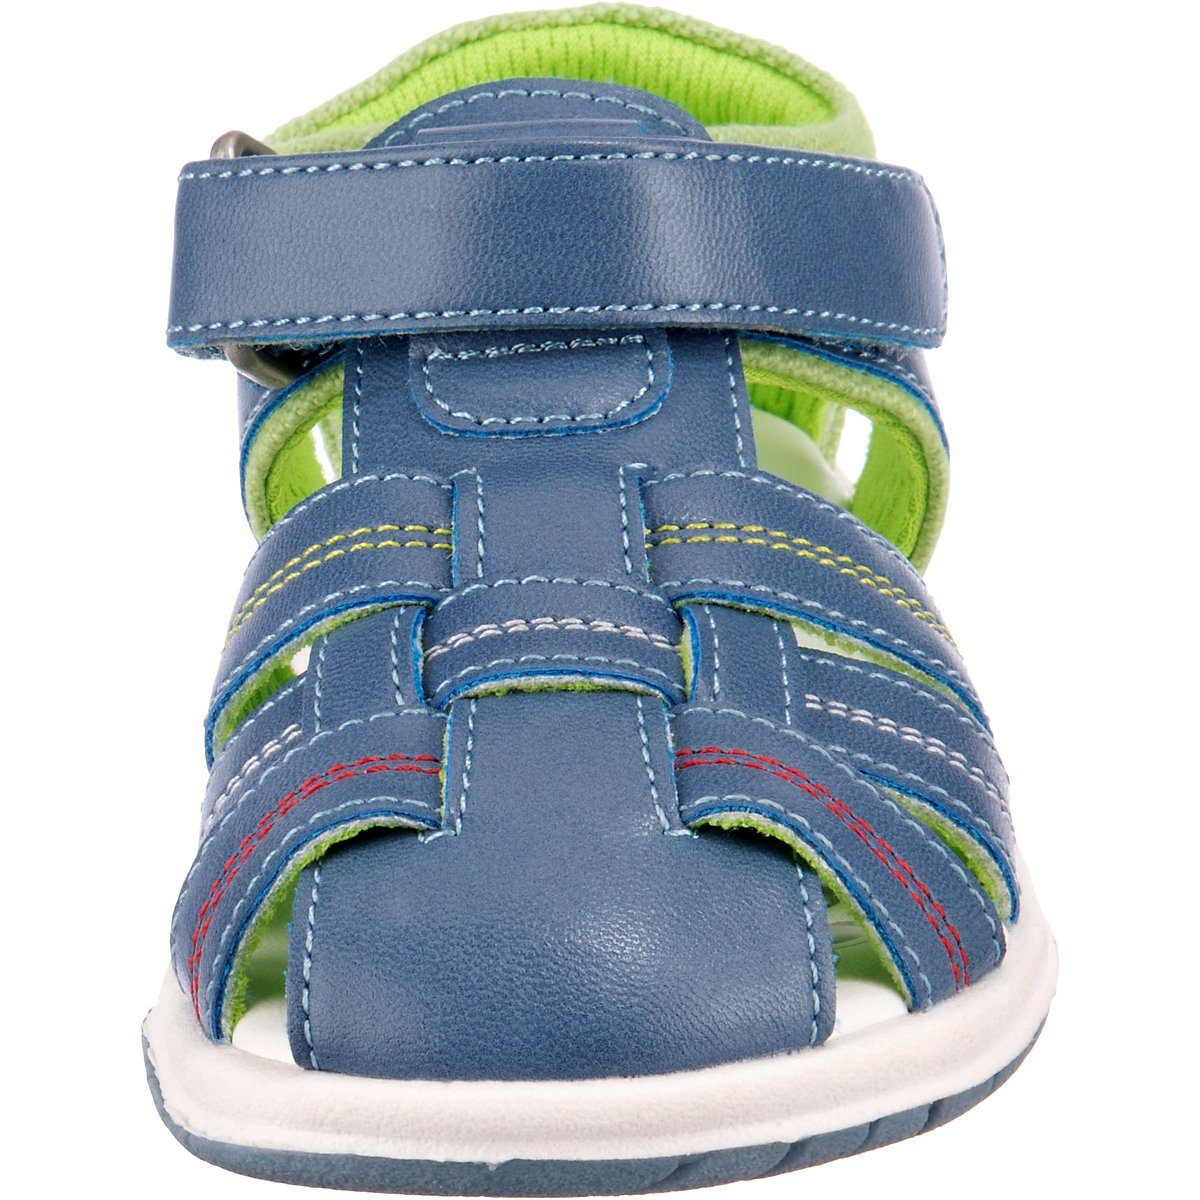 Schuhe Babyschuhe Jungen Chicco Baby Sandalen FAUSTO für Jungen Sandale